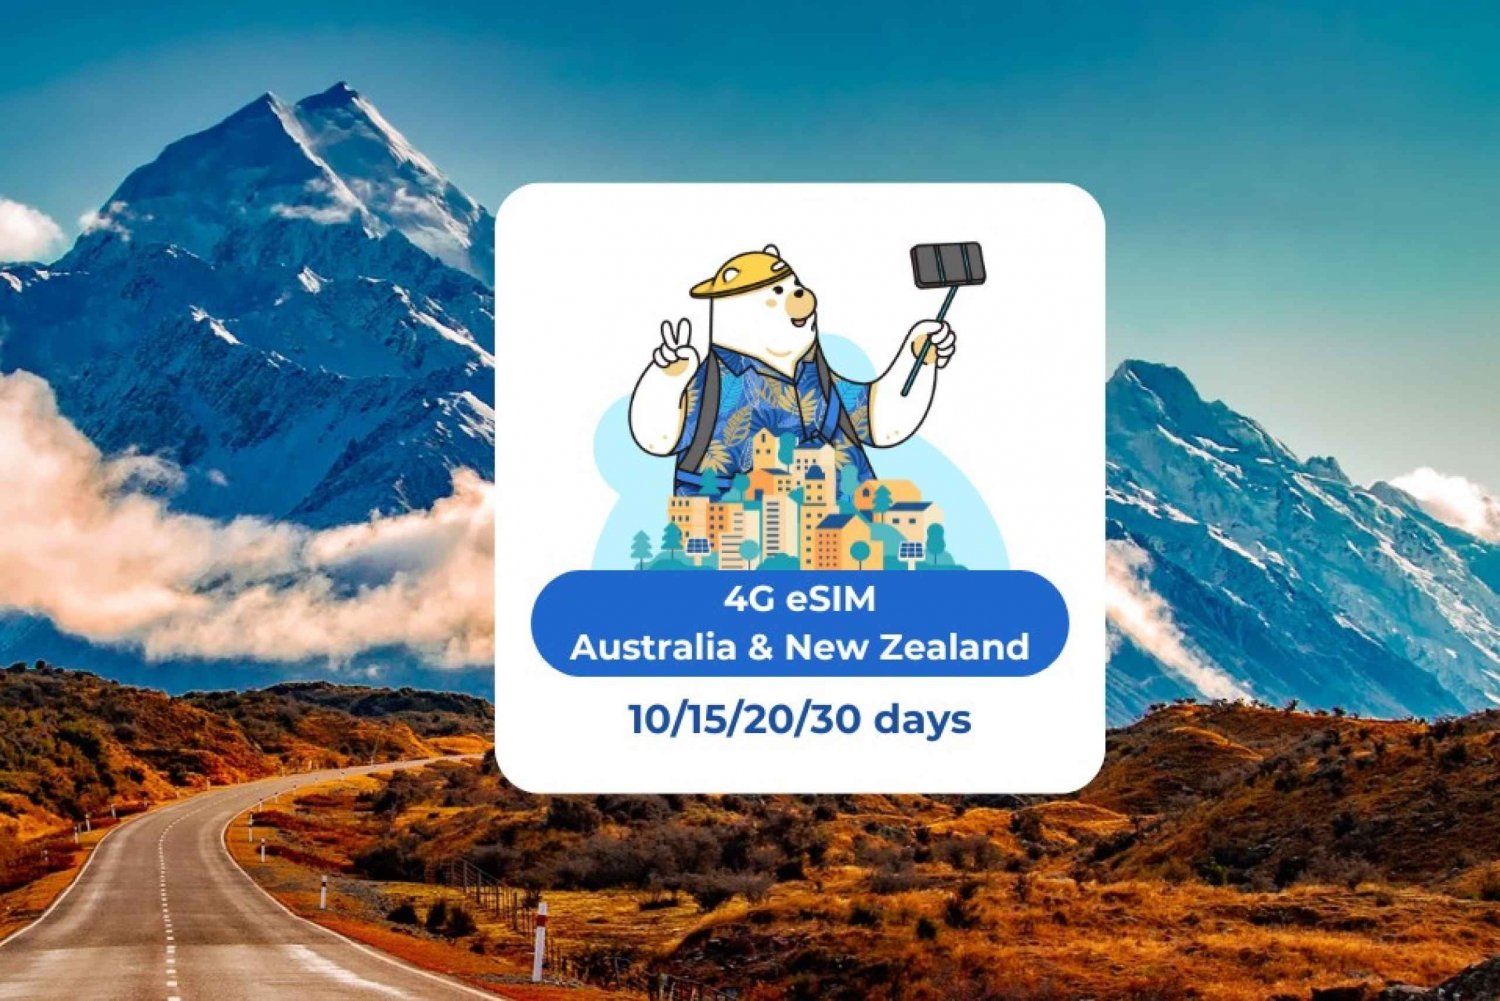 Australia & Newzealand: eSIM Mobile Data 10/15/20/30 days